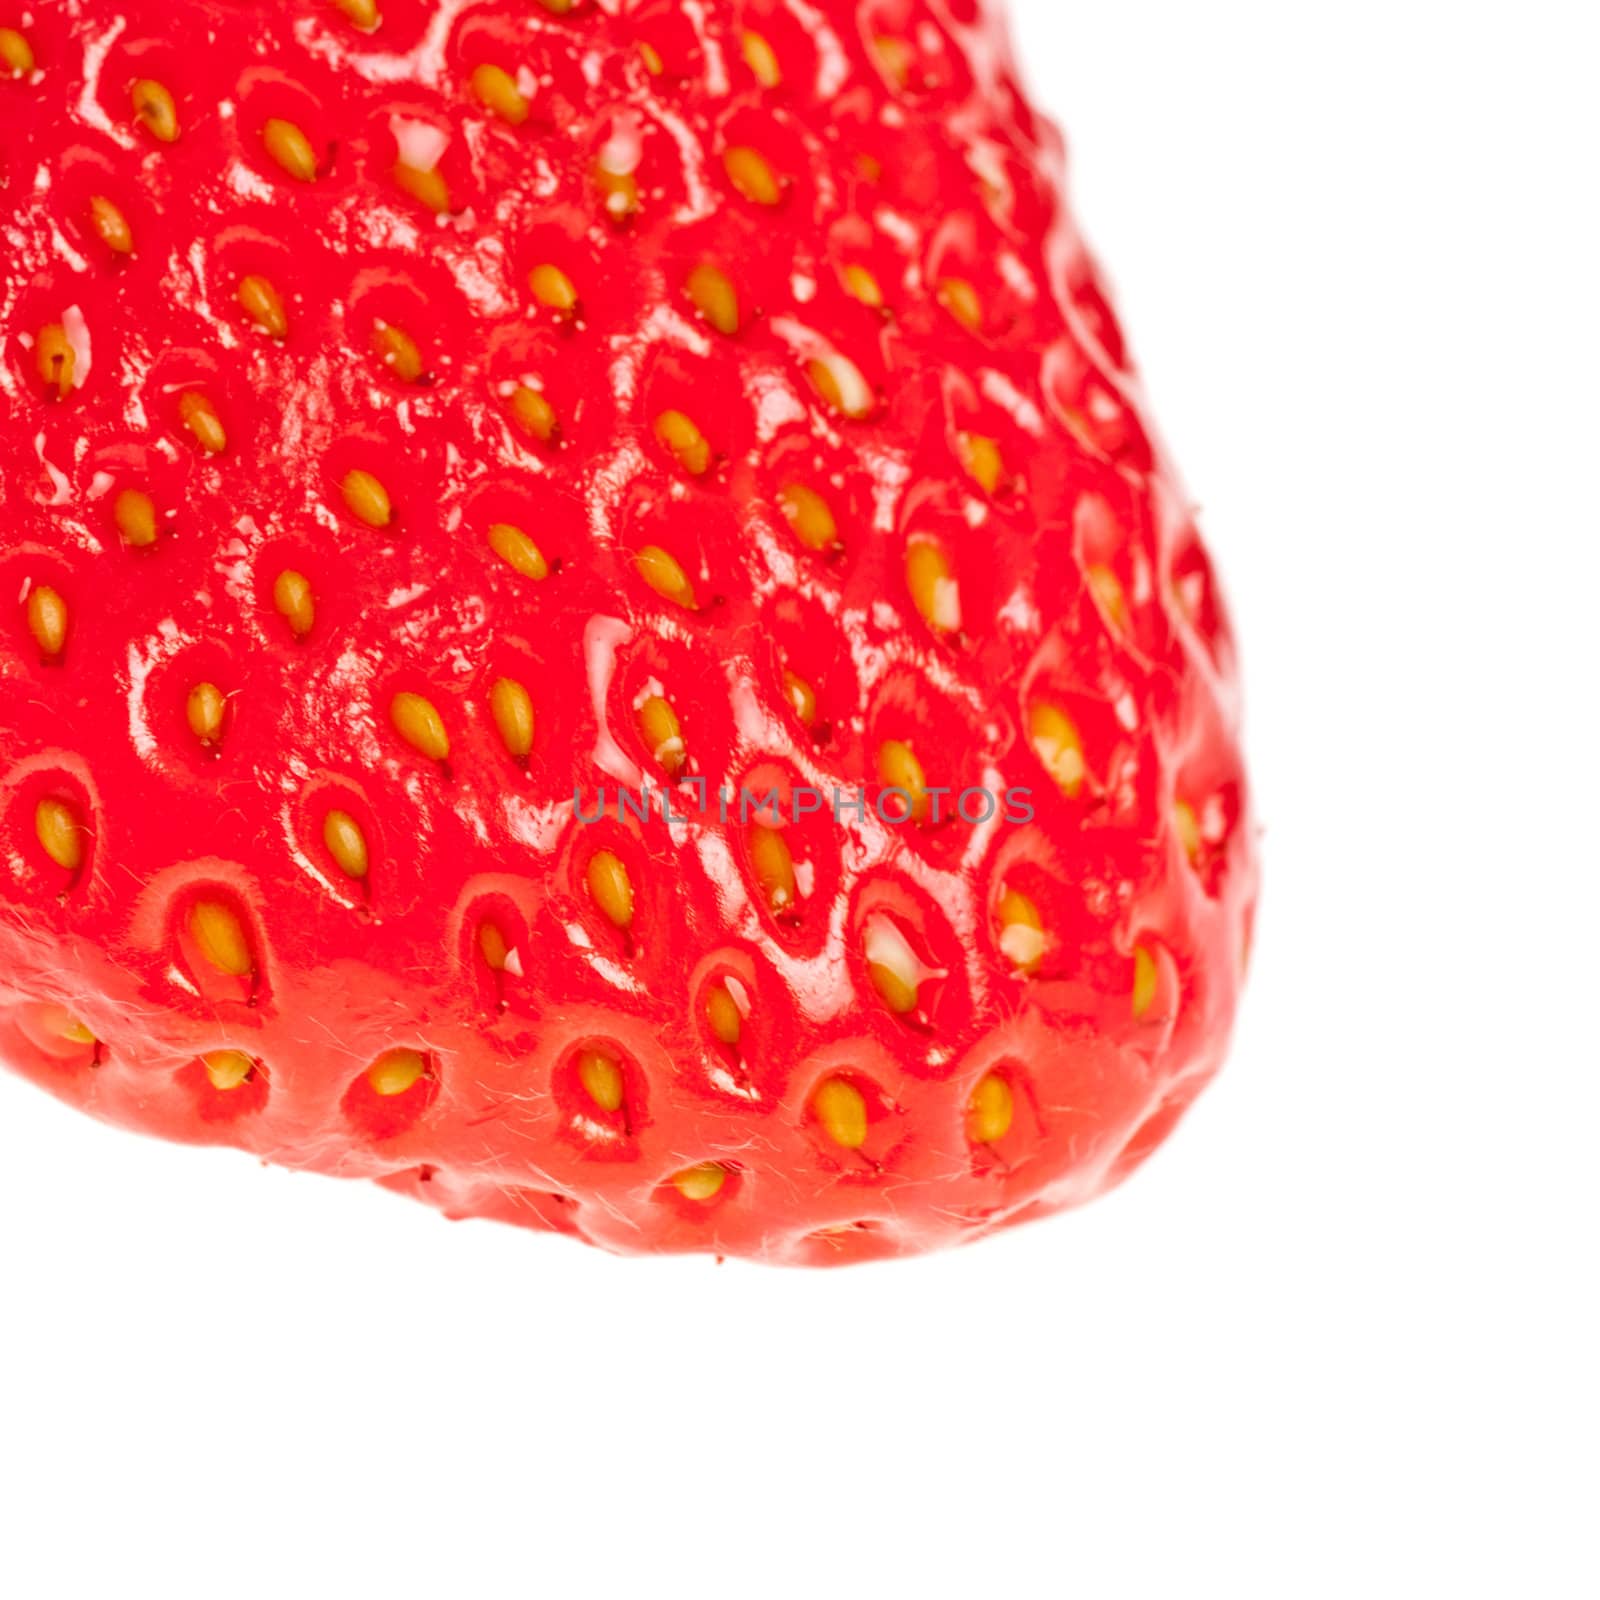 Strawberry Part by petr_malyshev